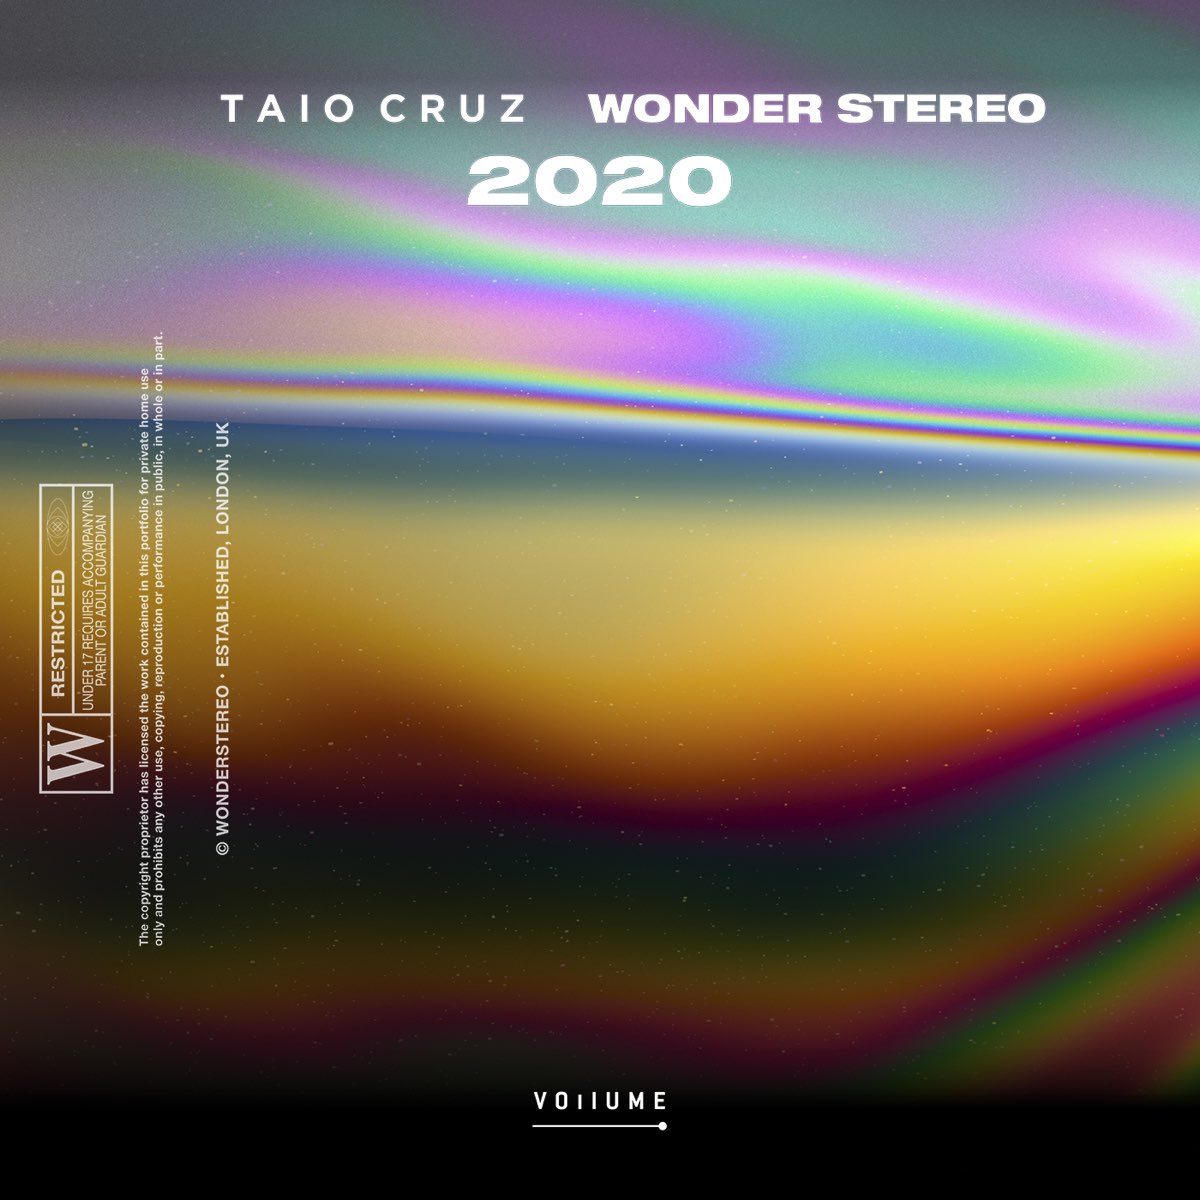 Taio Cruz & Wonder Stereo 2020 cover artwork